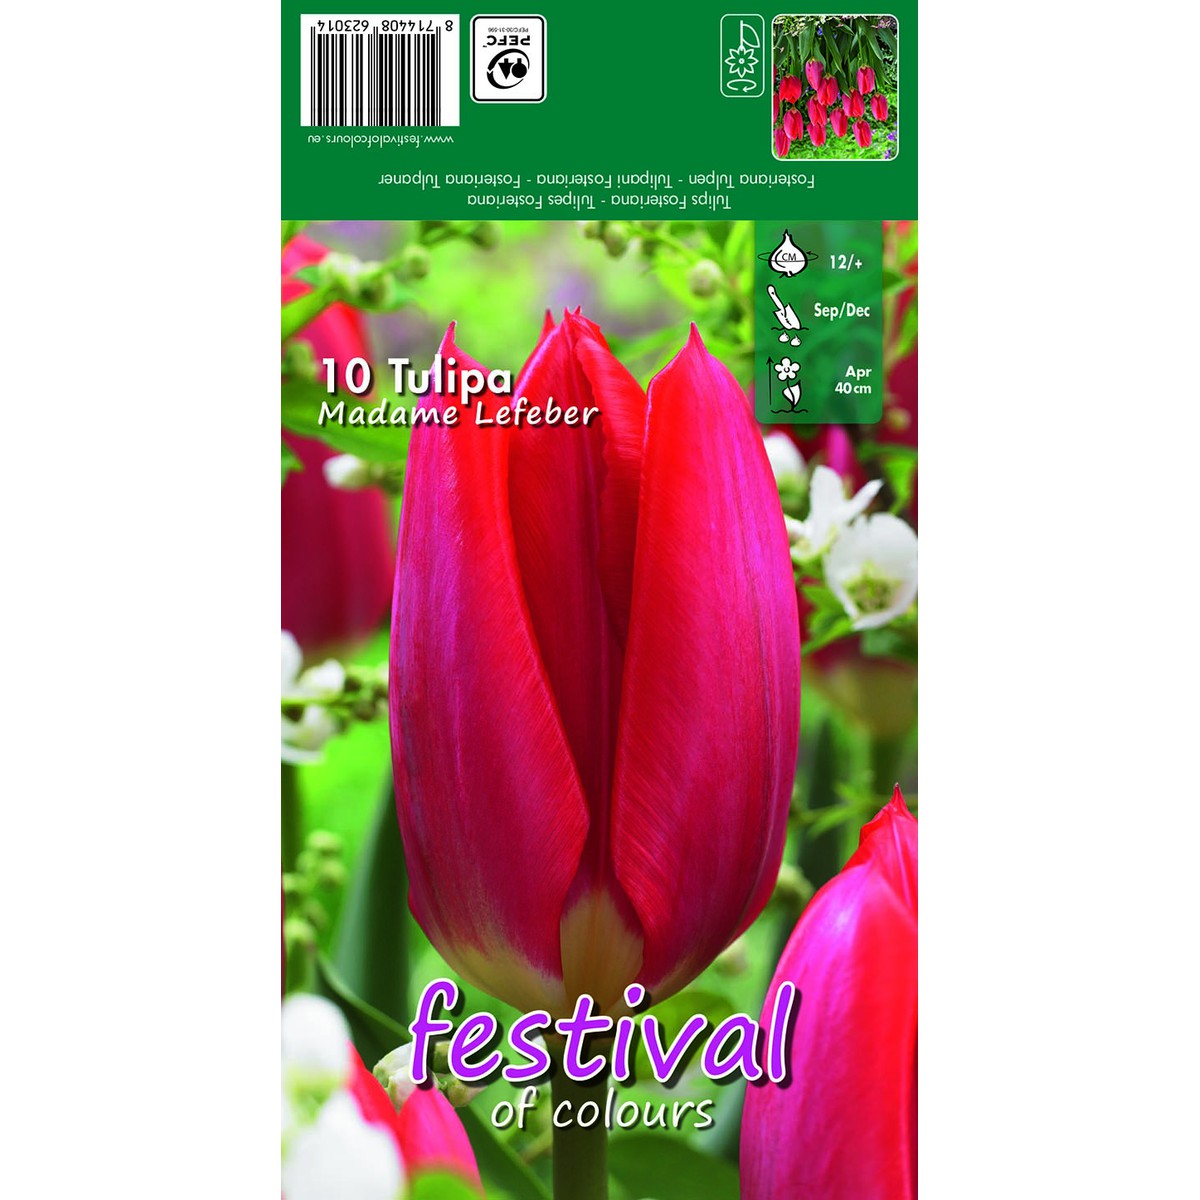   Tulipes 'Madame Lefeber'  10 pcs 12/